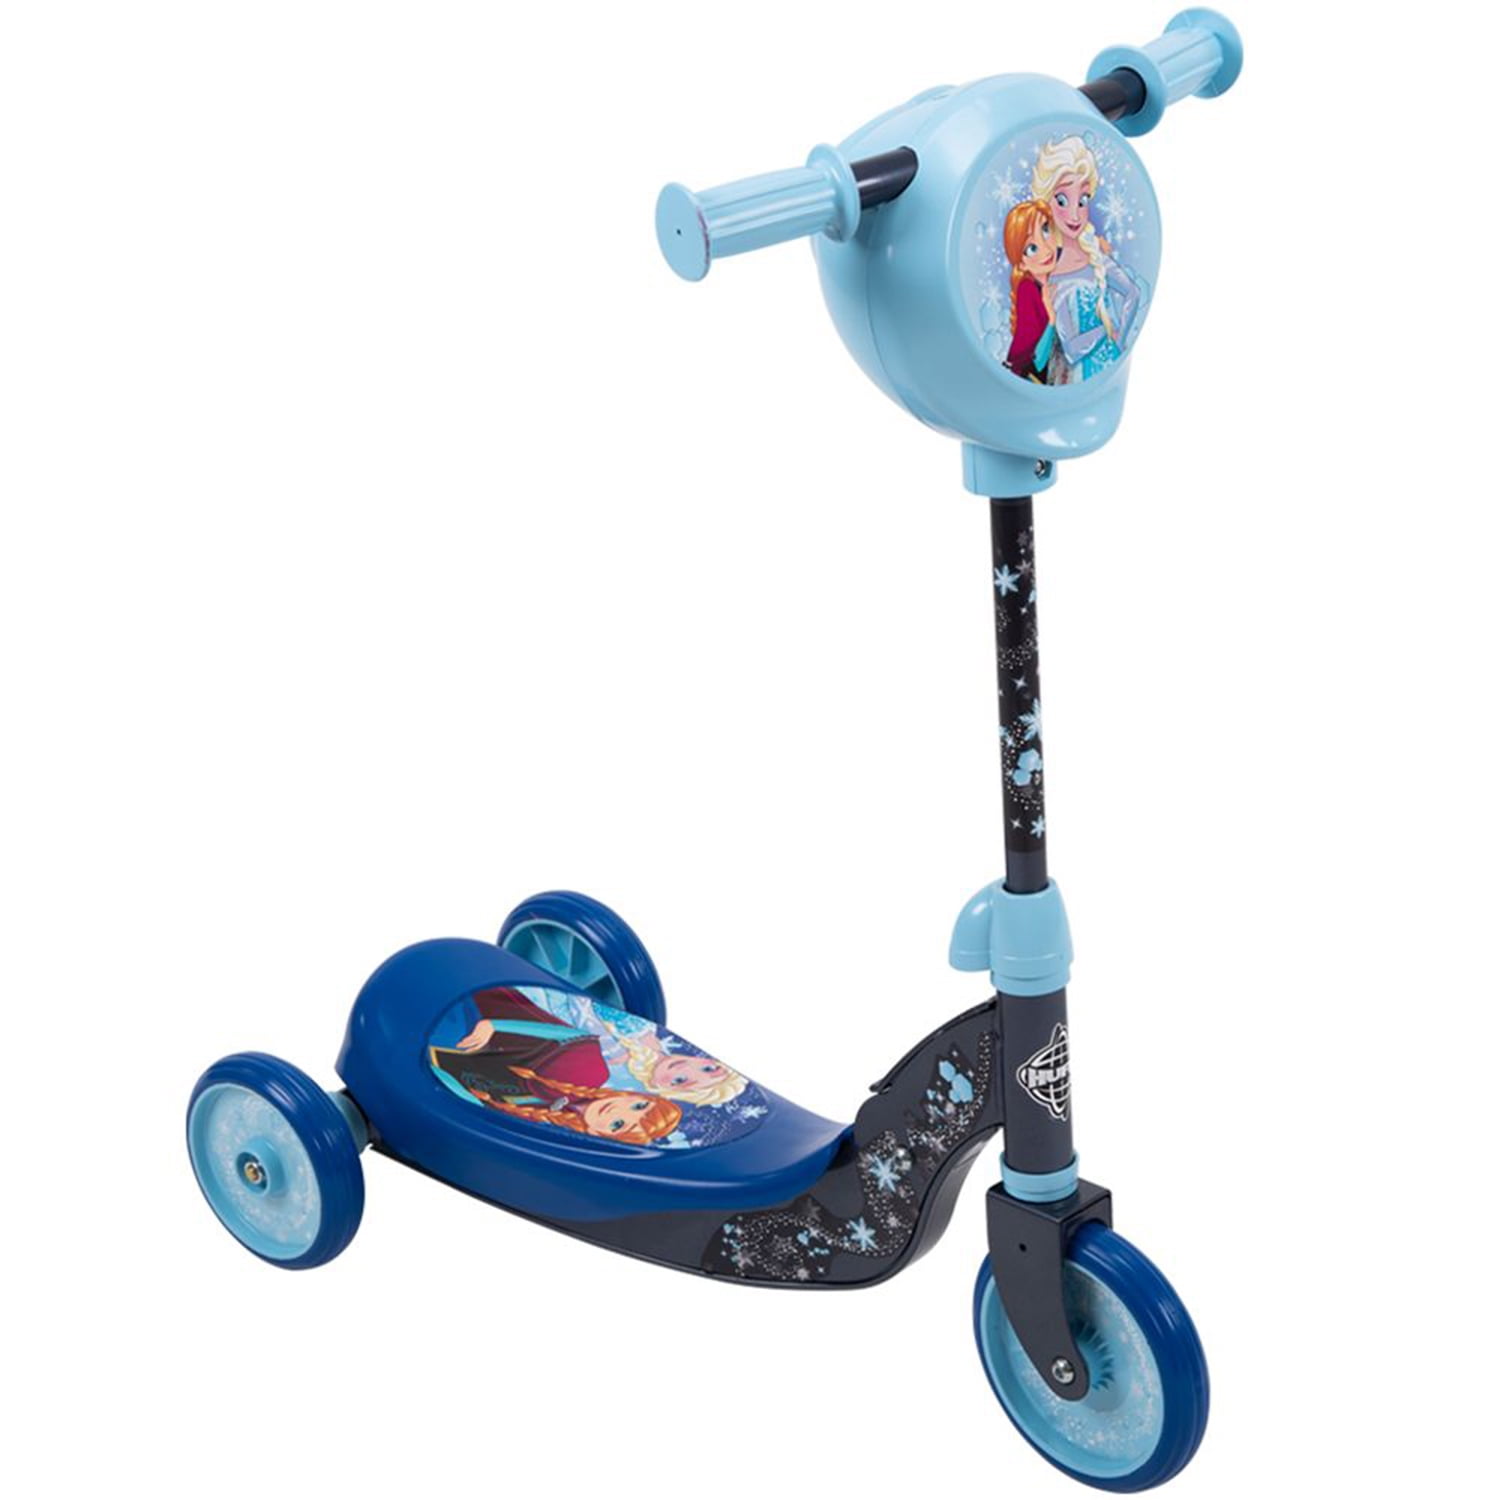 Huffy 38679 Disney Frozen Girls&amp;#39; Preschool Toddler Scooter with Storage, Blue